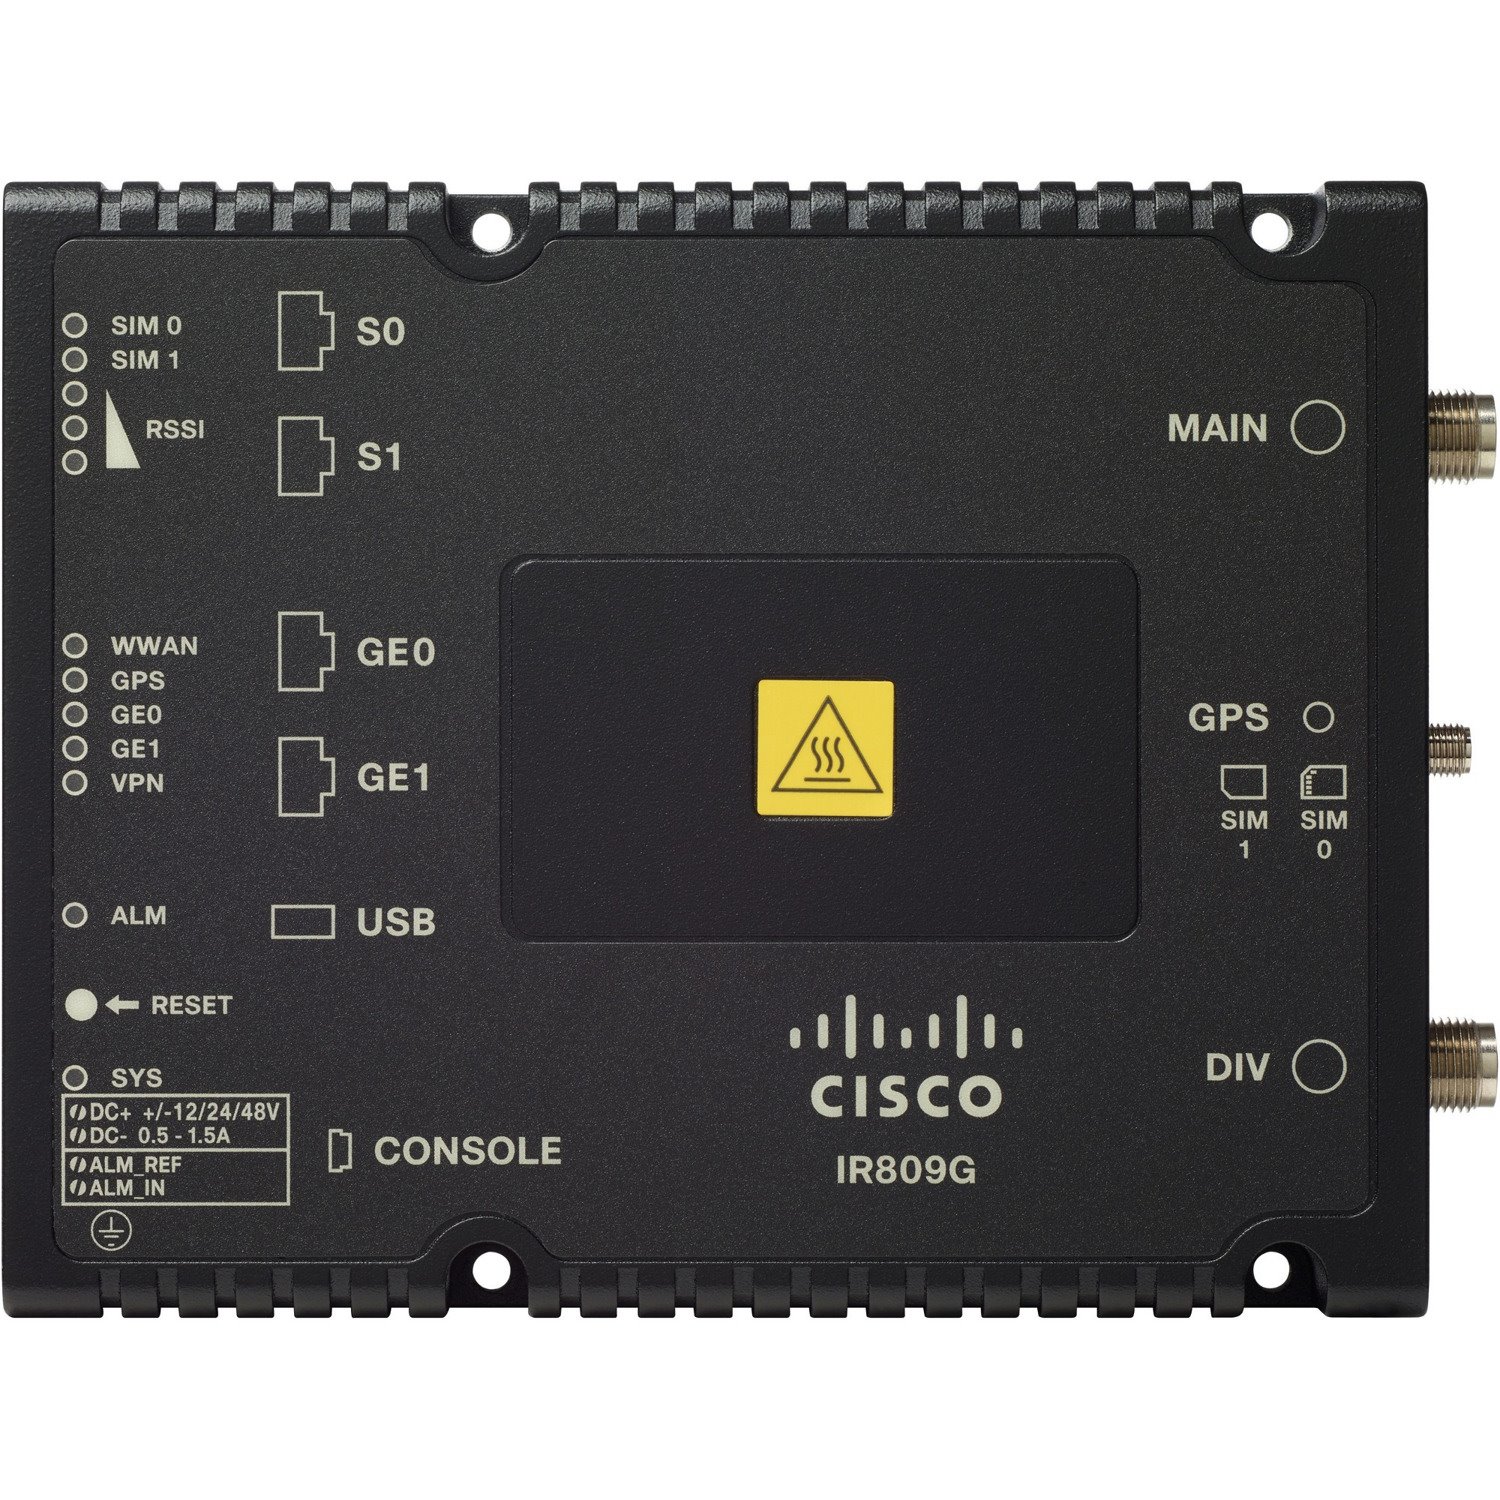 Cisco 809 Cellular Modem/Wireless Router - Refurbished